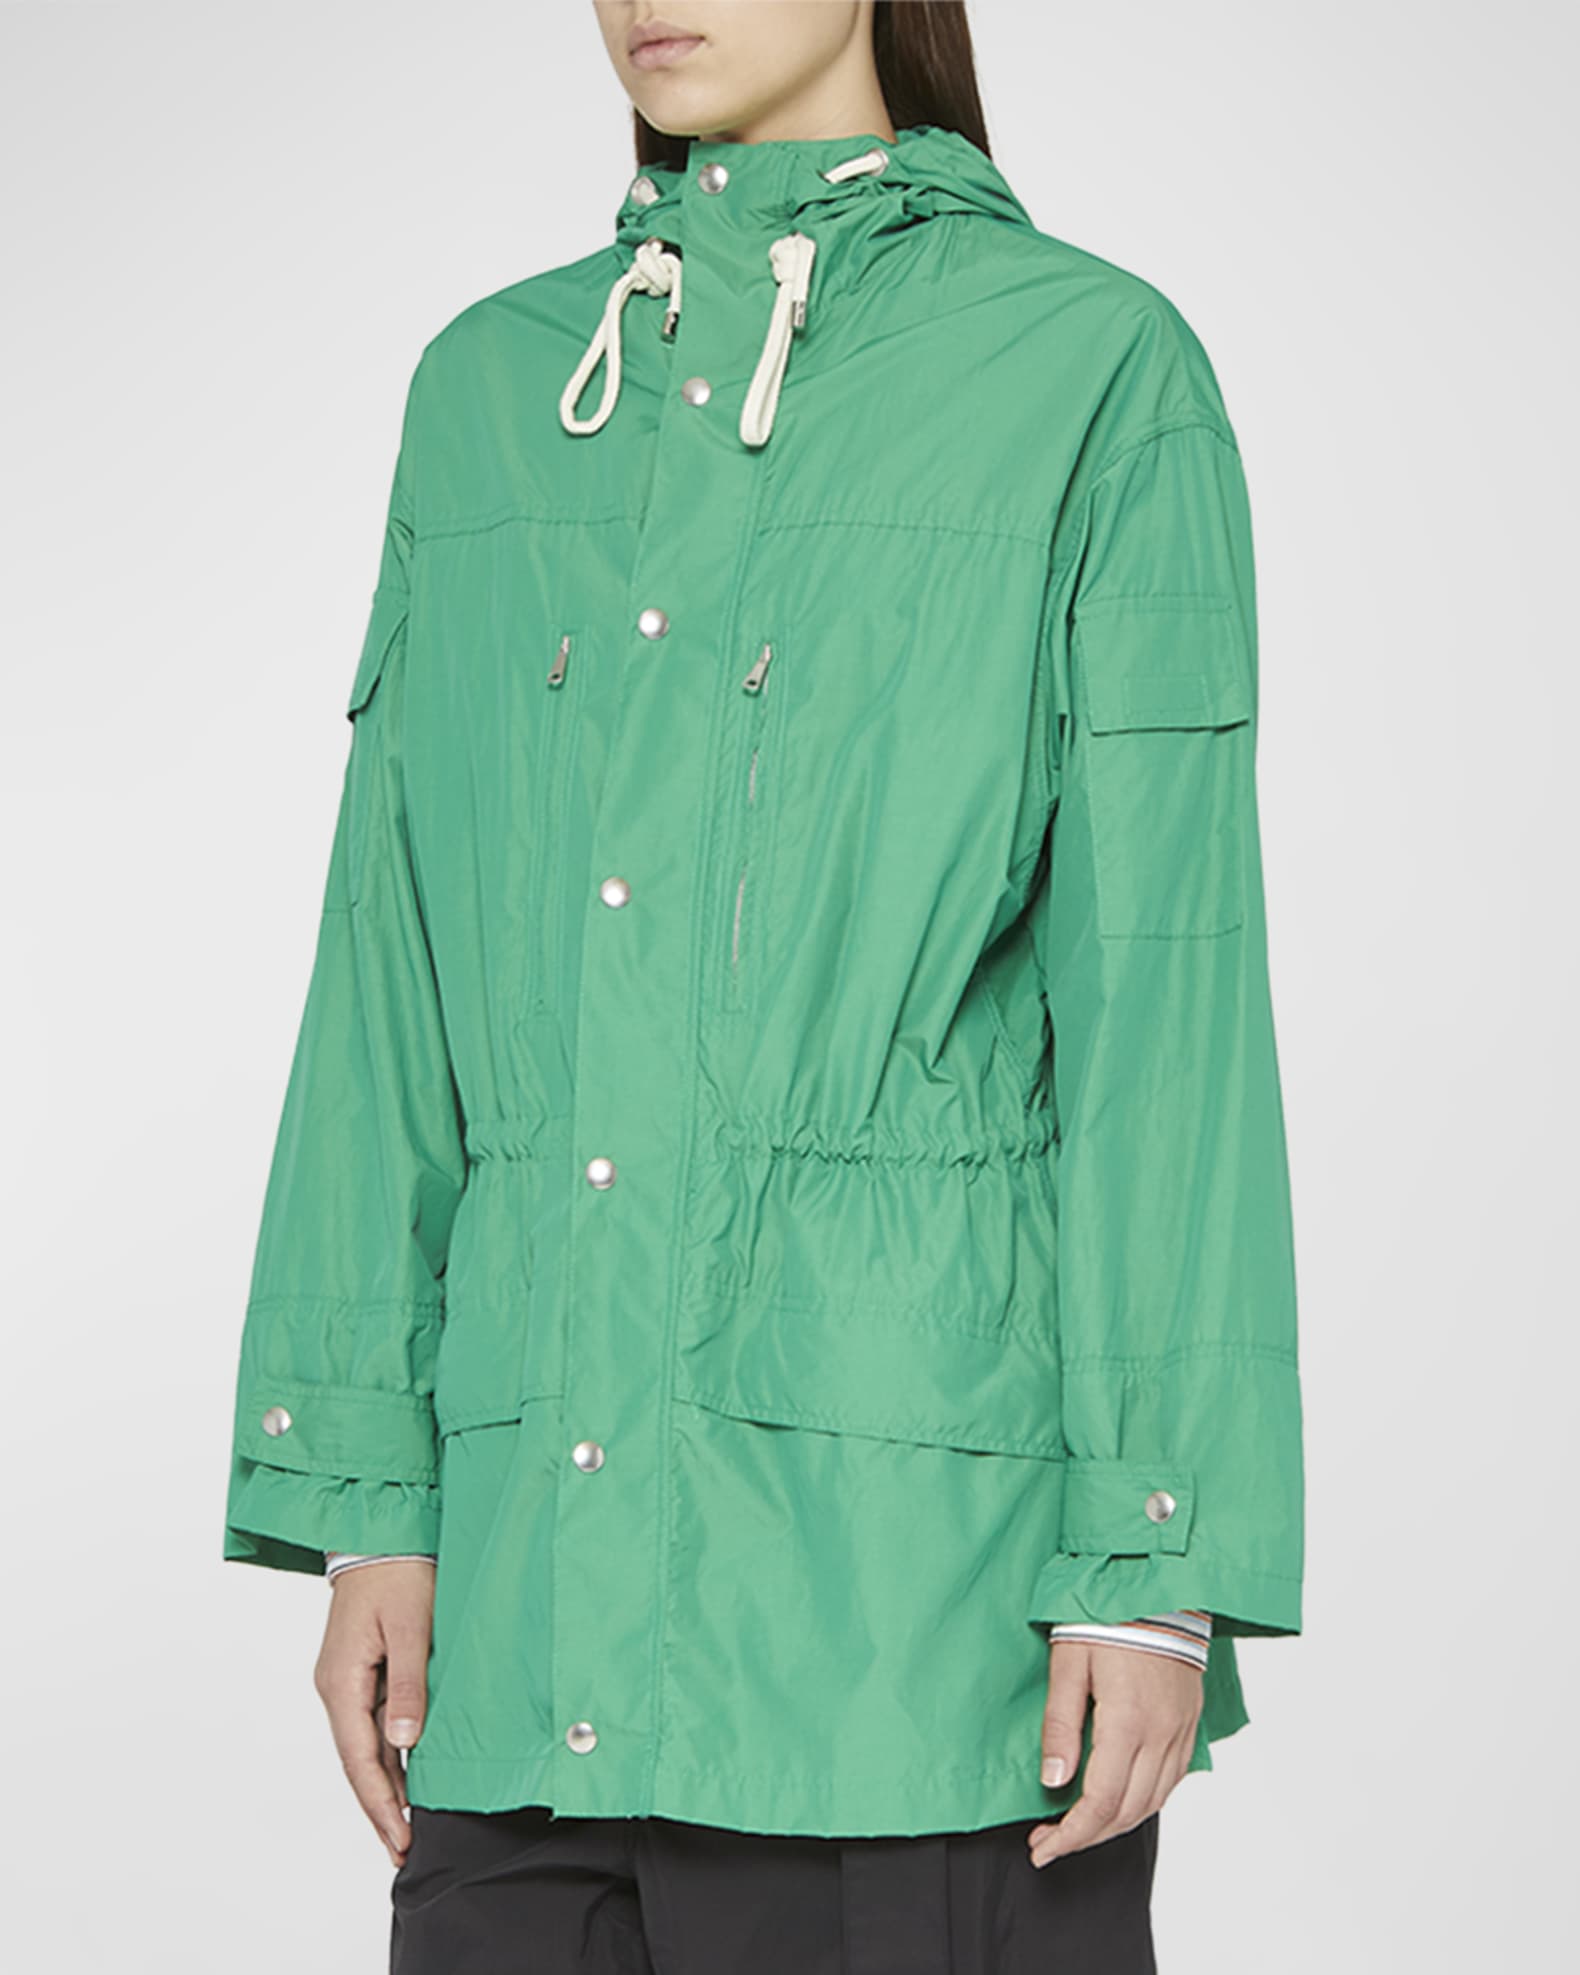 Plan C Hooded Rain Jacket | Neiman Marcus